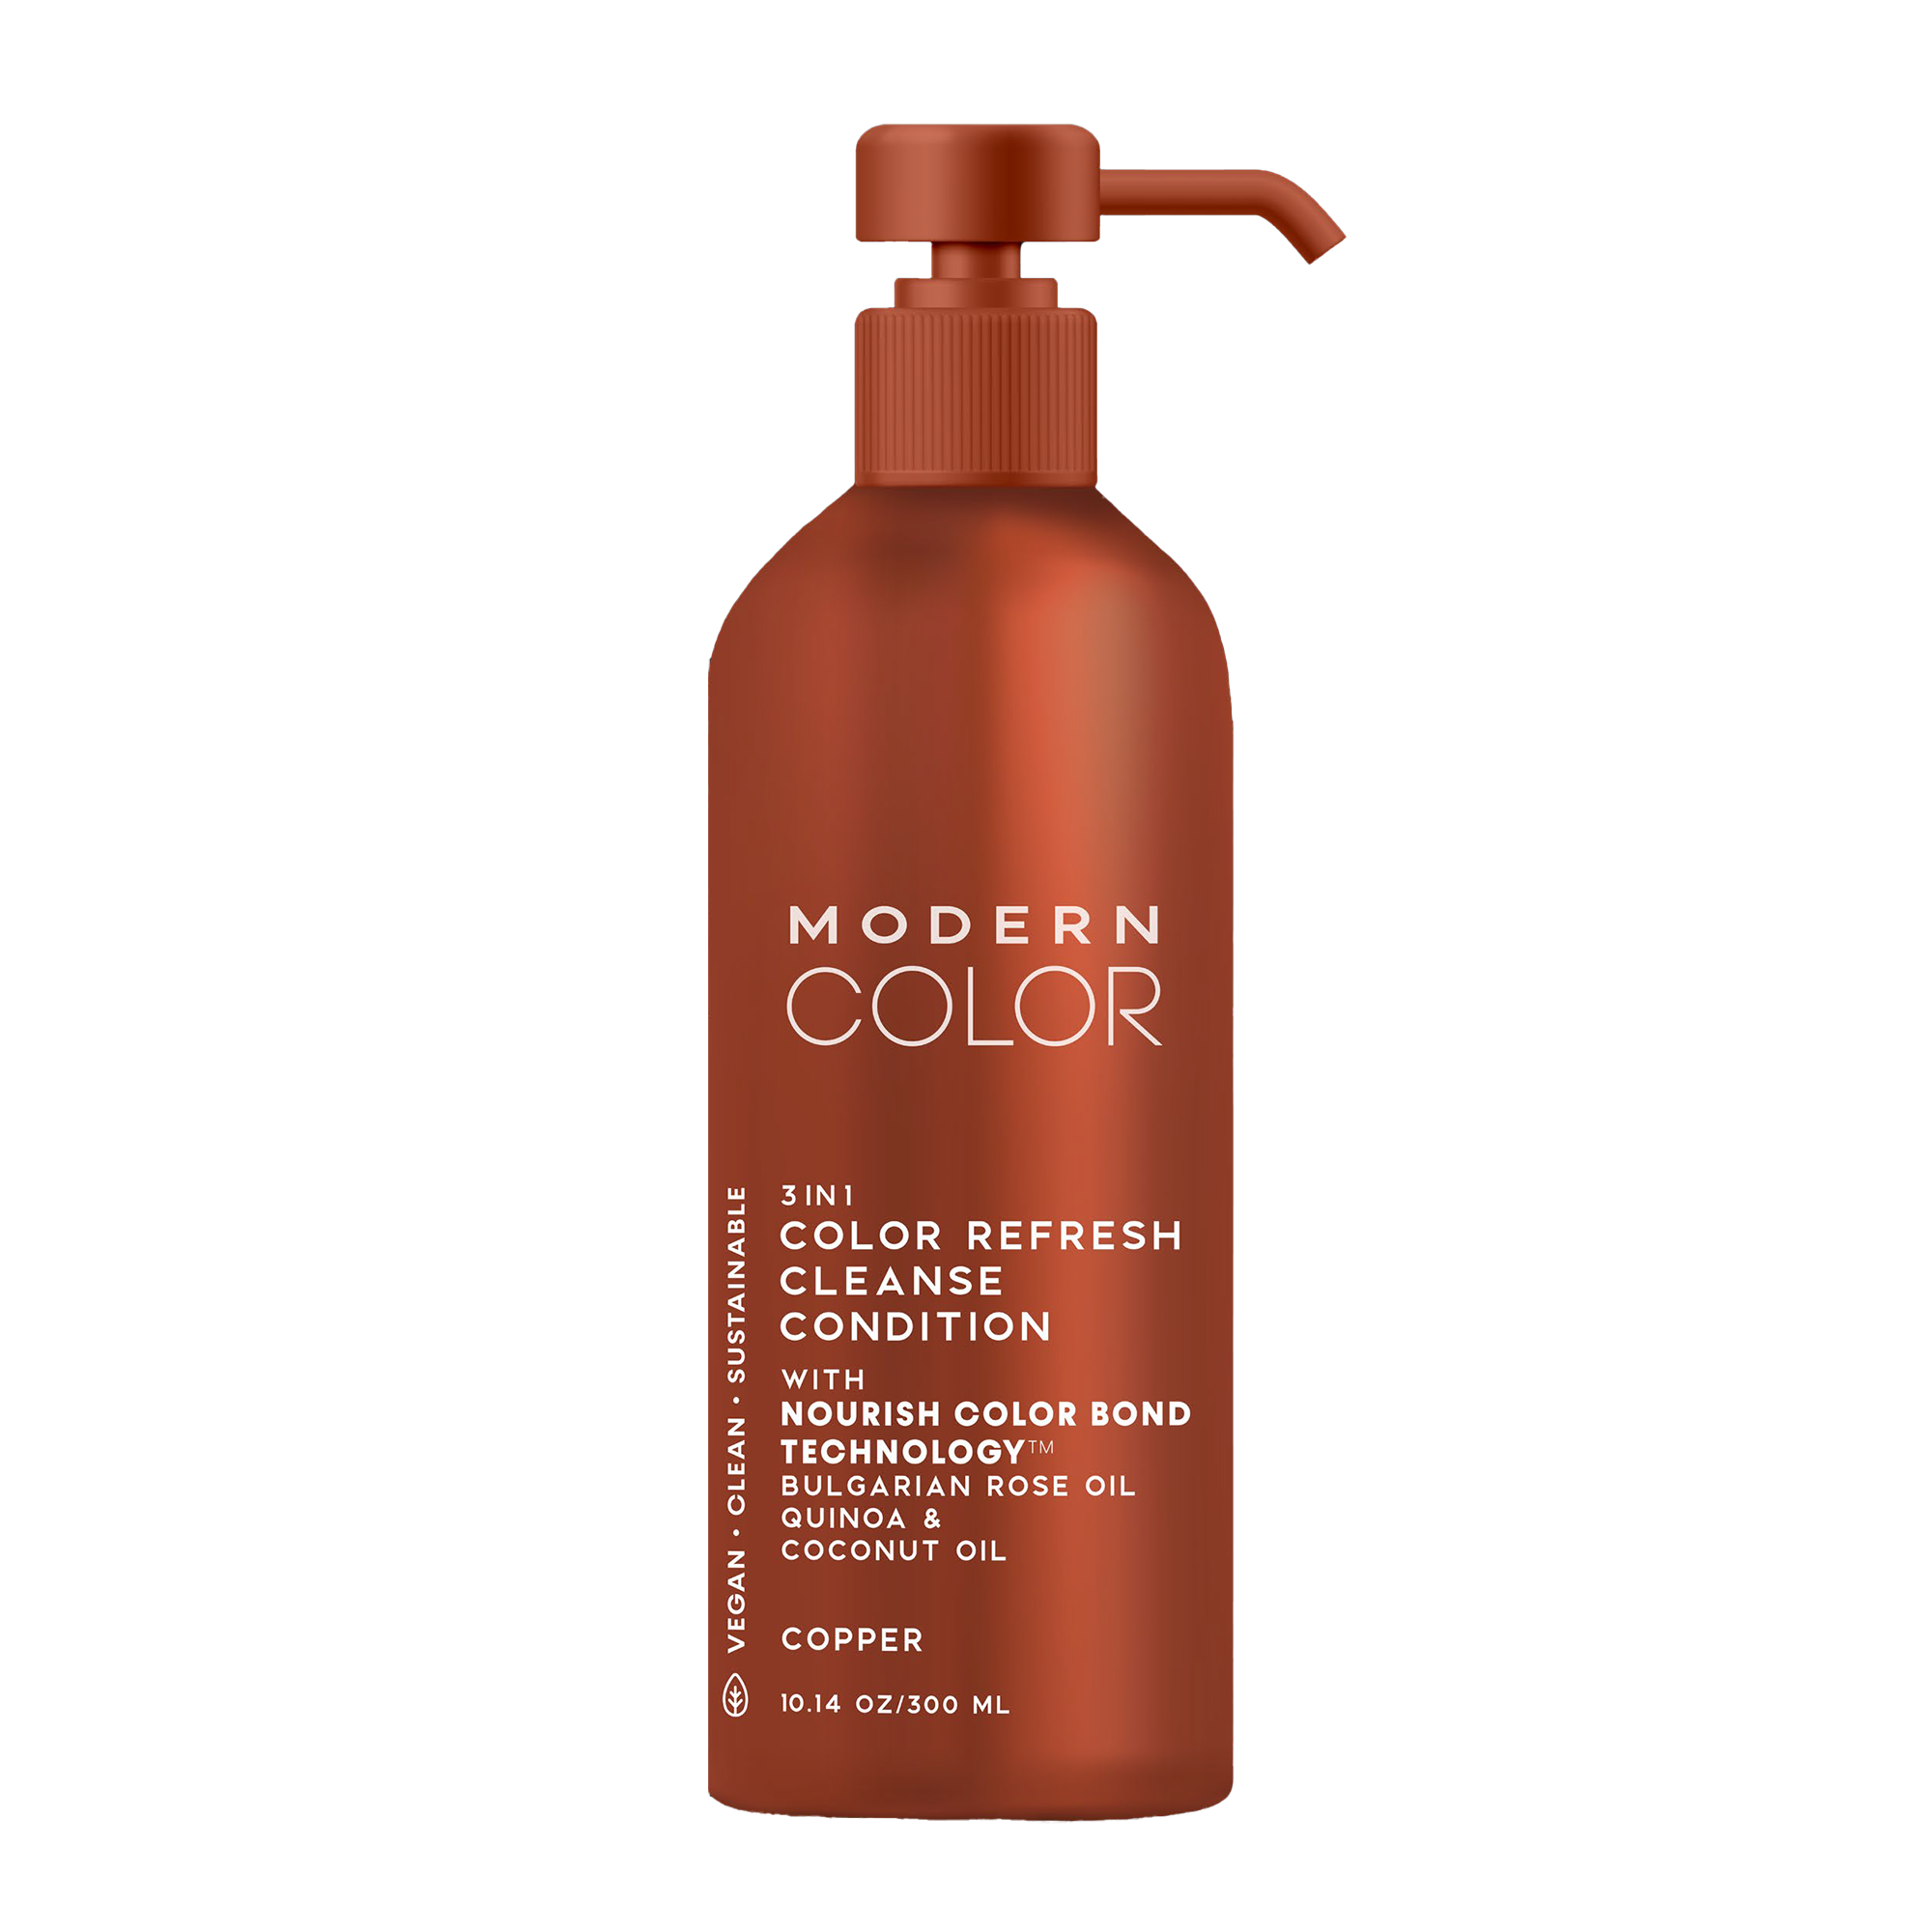 Modern Color 3-in-1 Color Refresh Cleanse Condition - Copper / COPPER